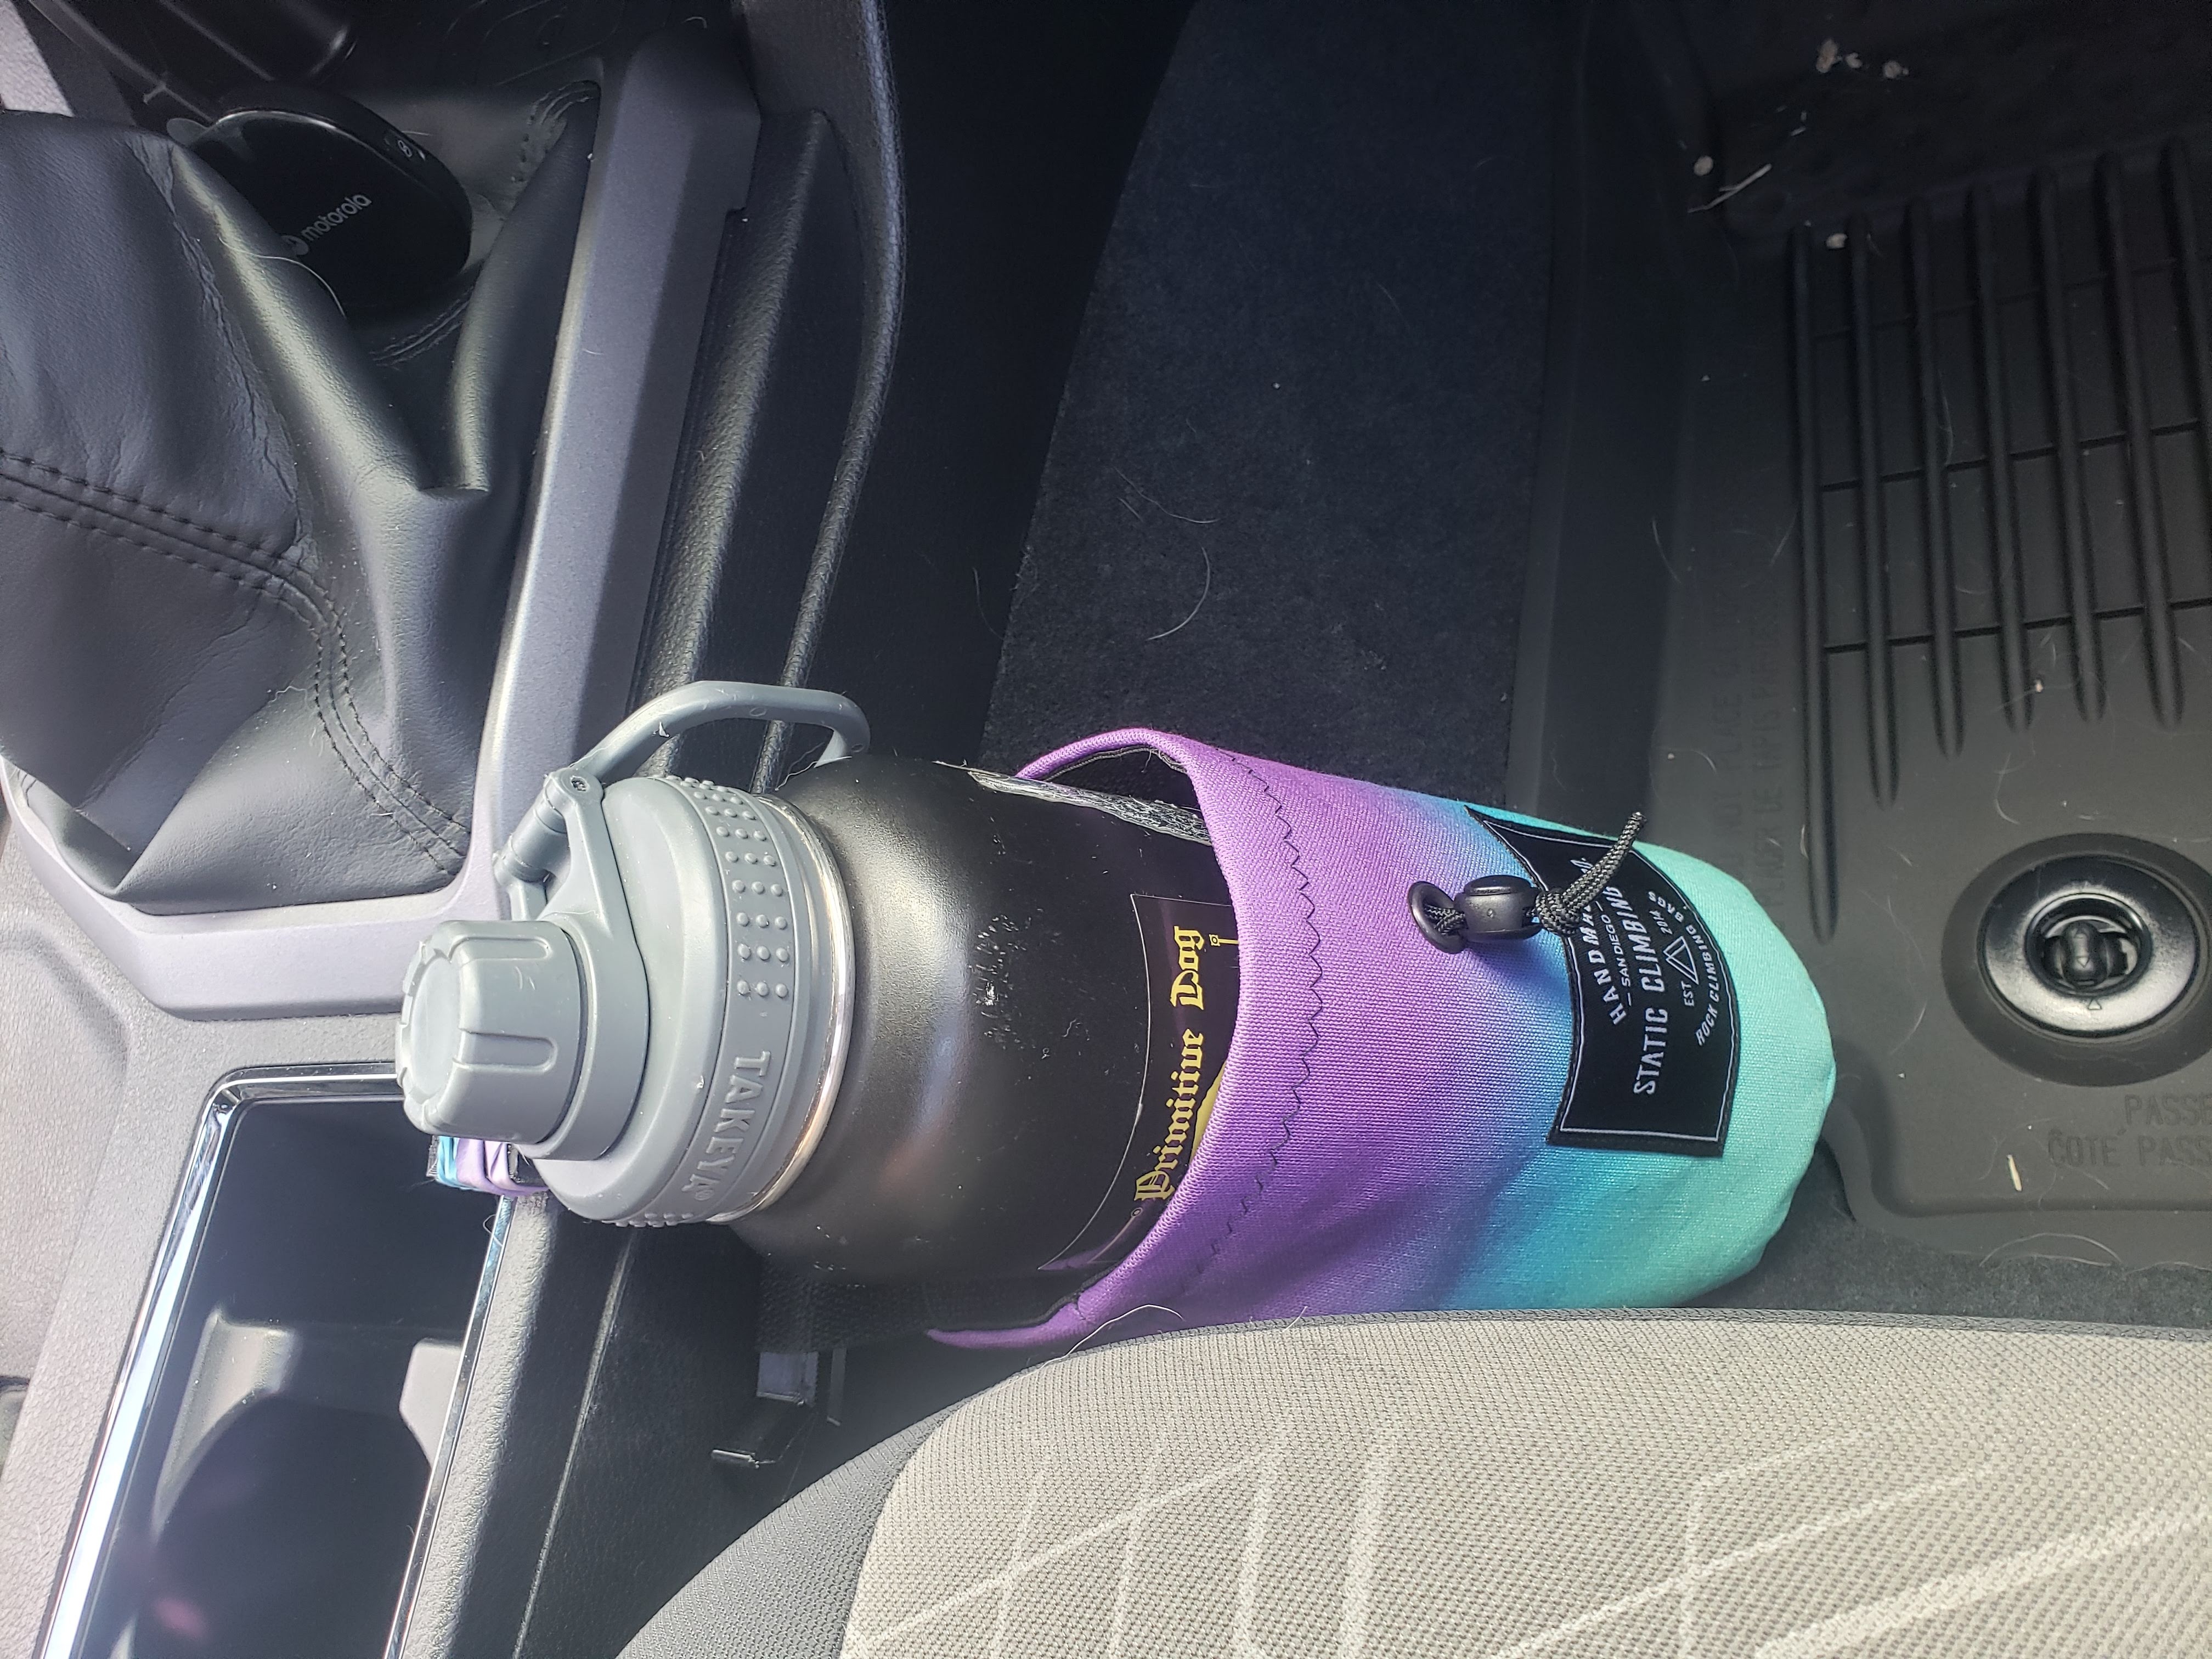 Toyota Tacoma vacuum insulated water bottle holder